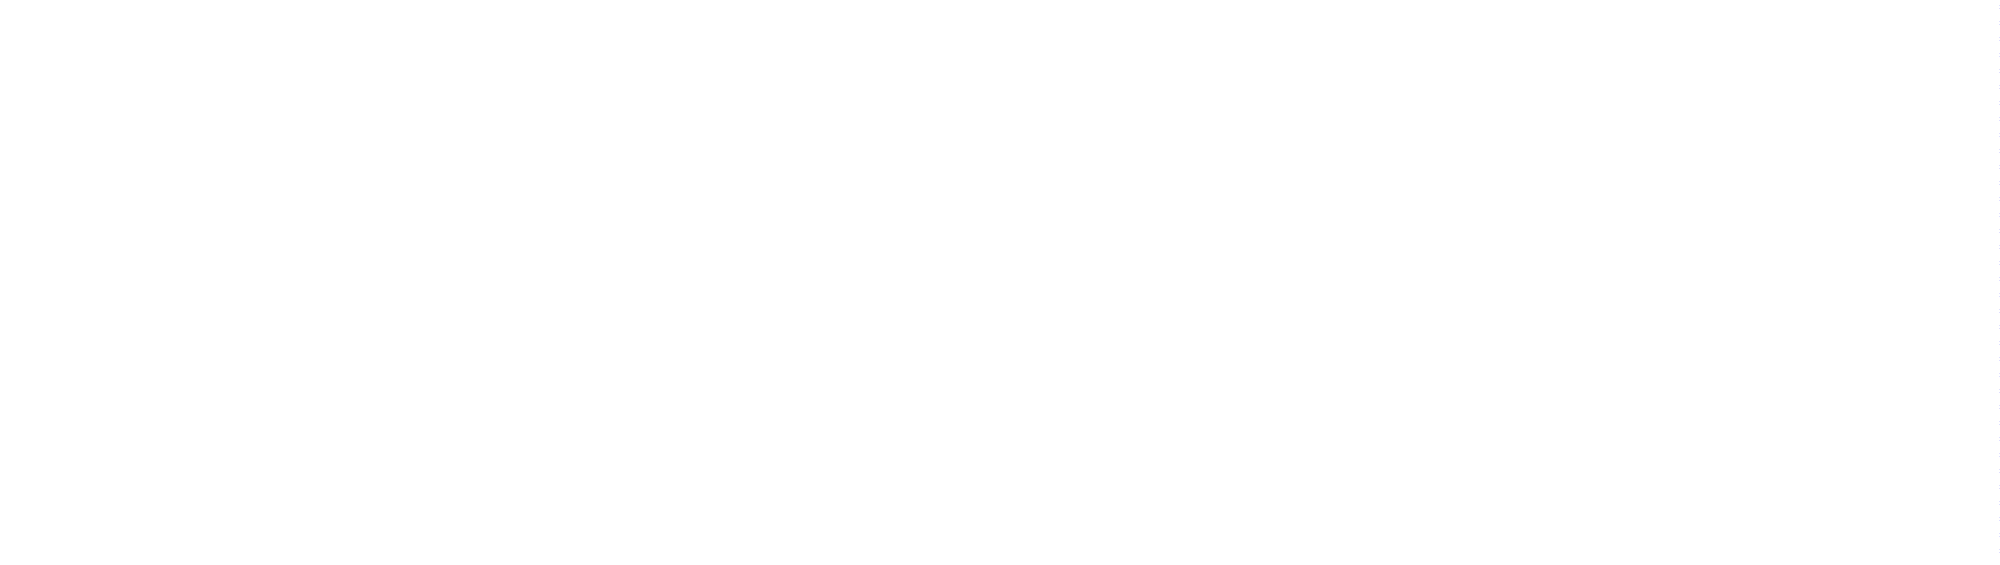 Buzzlead logo horizontal monocromia branco png